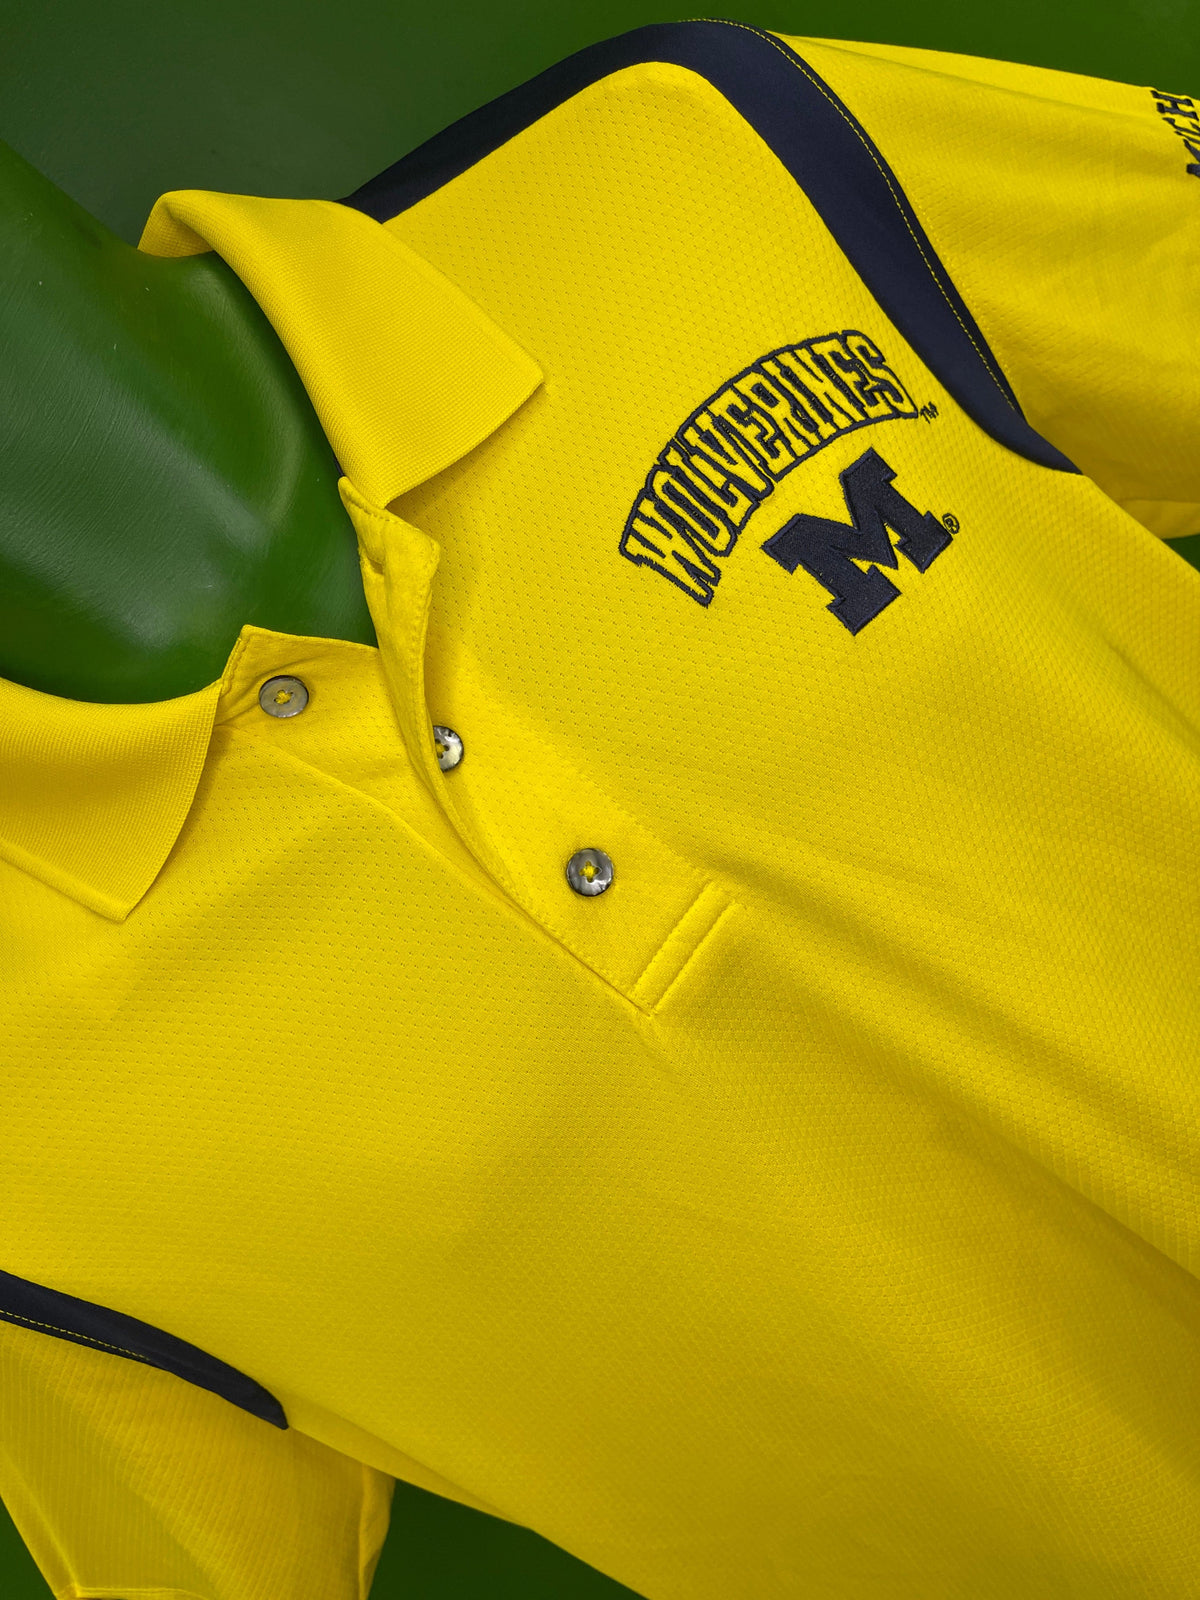 NCAA Michigan Wolverines Golf Polo Shirt Men's Medium 38/40